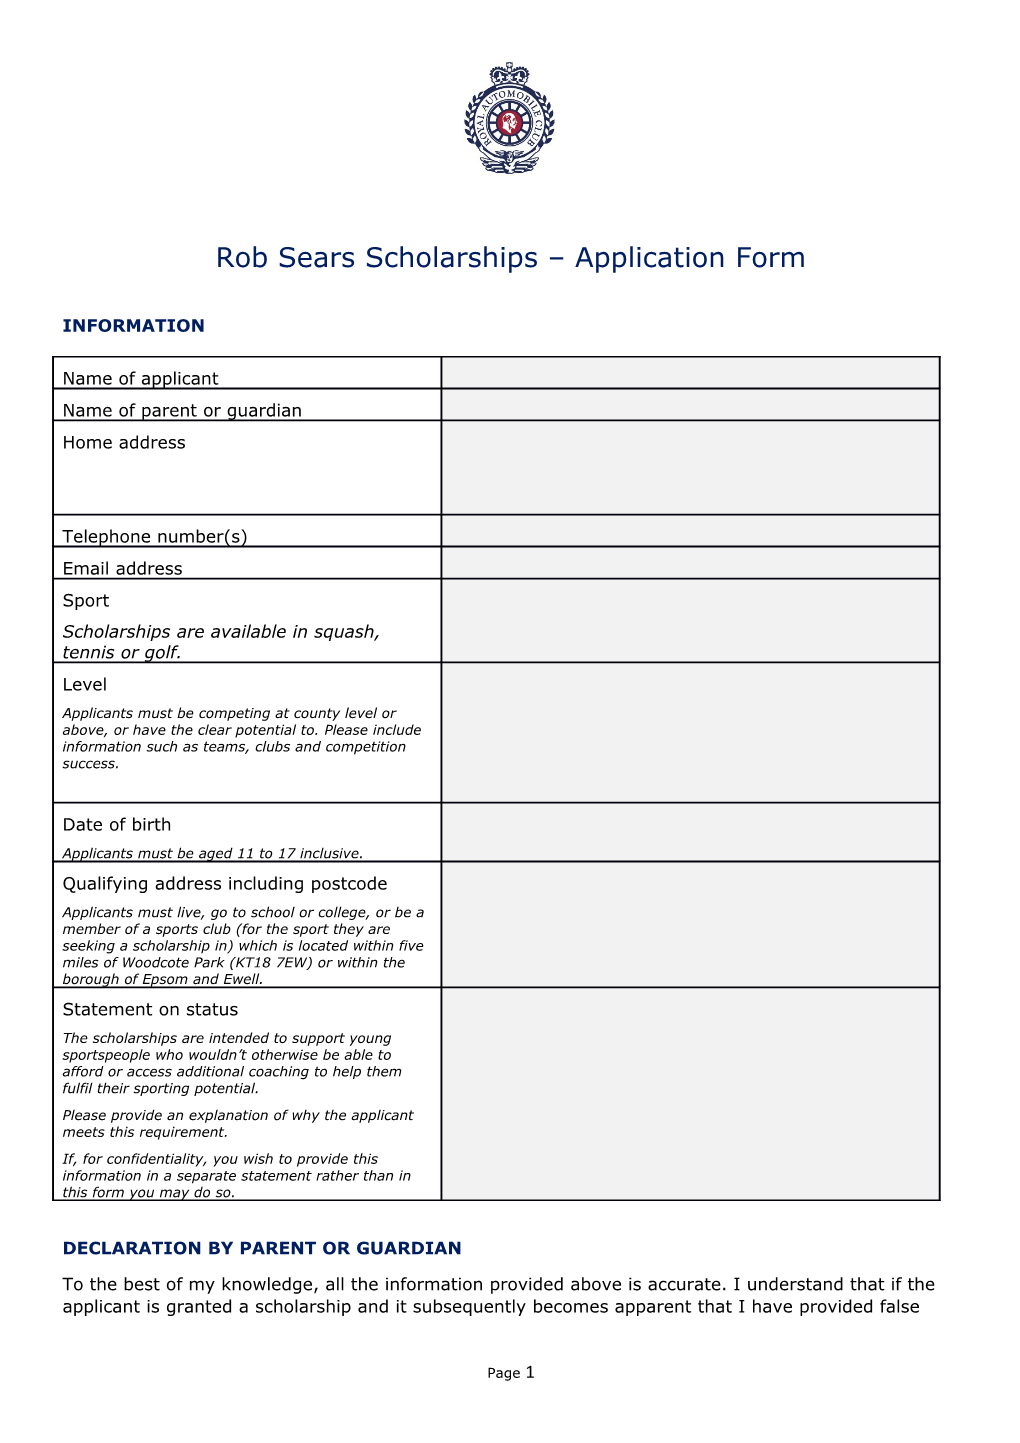 Rob Sears Scholarships Application Form